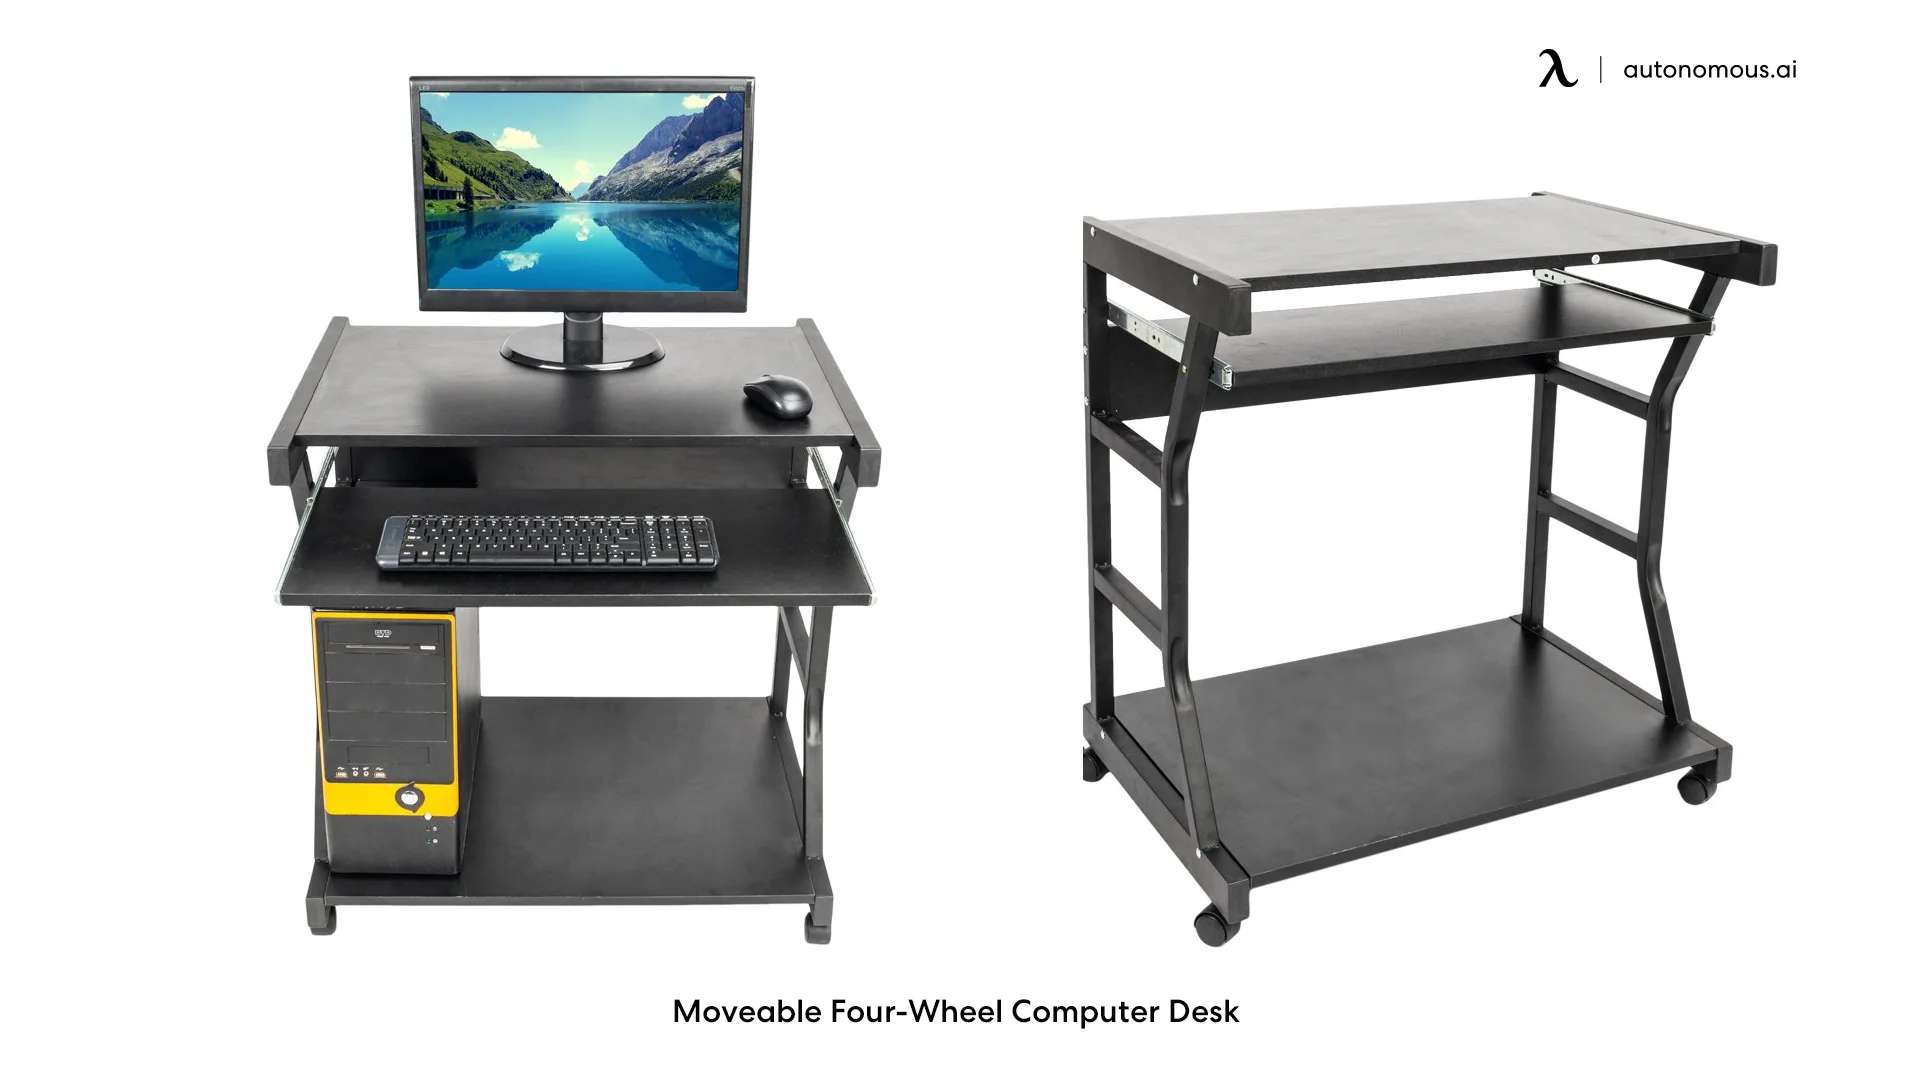 Moveable Four-Wheel Computer Desk